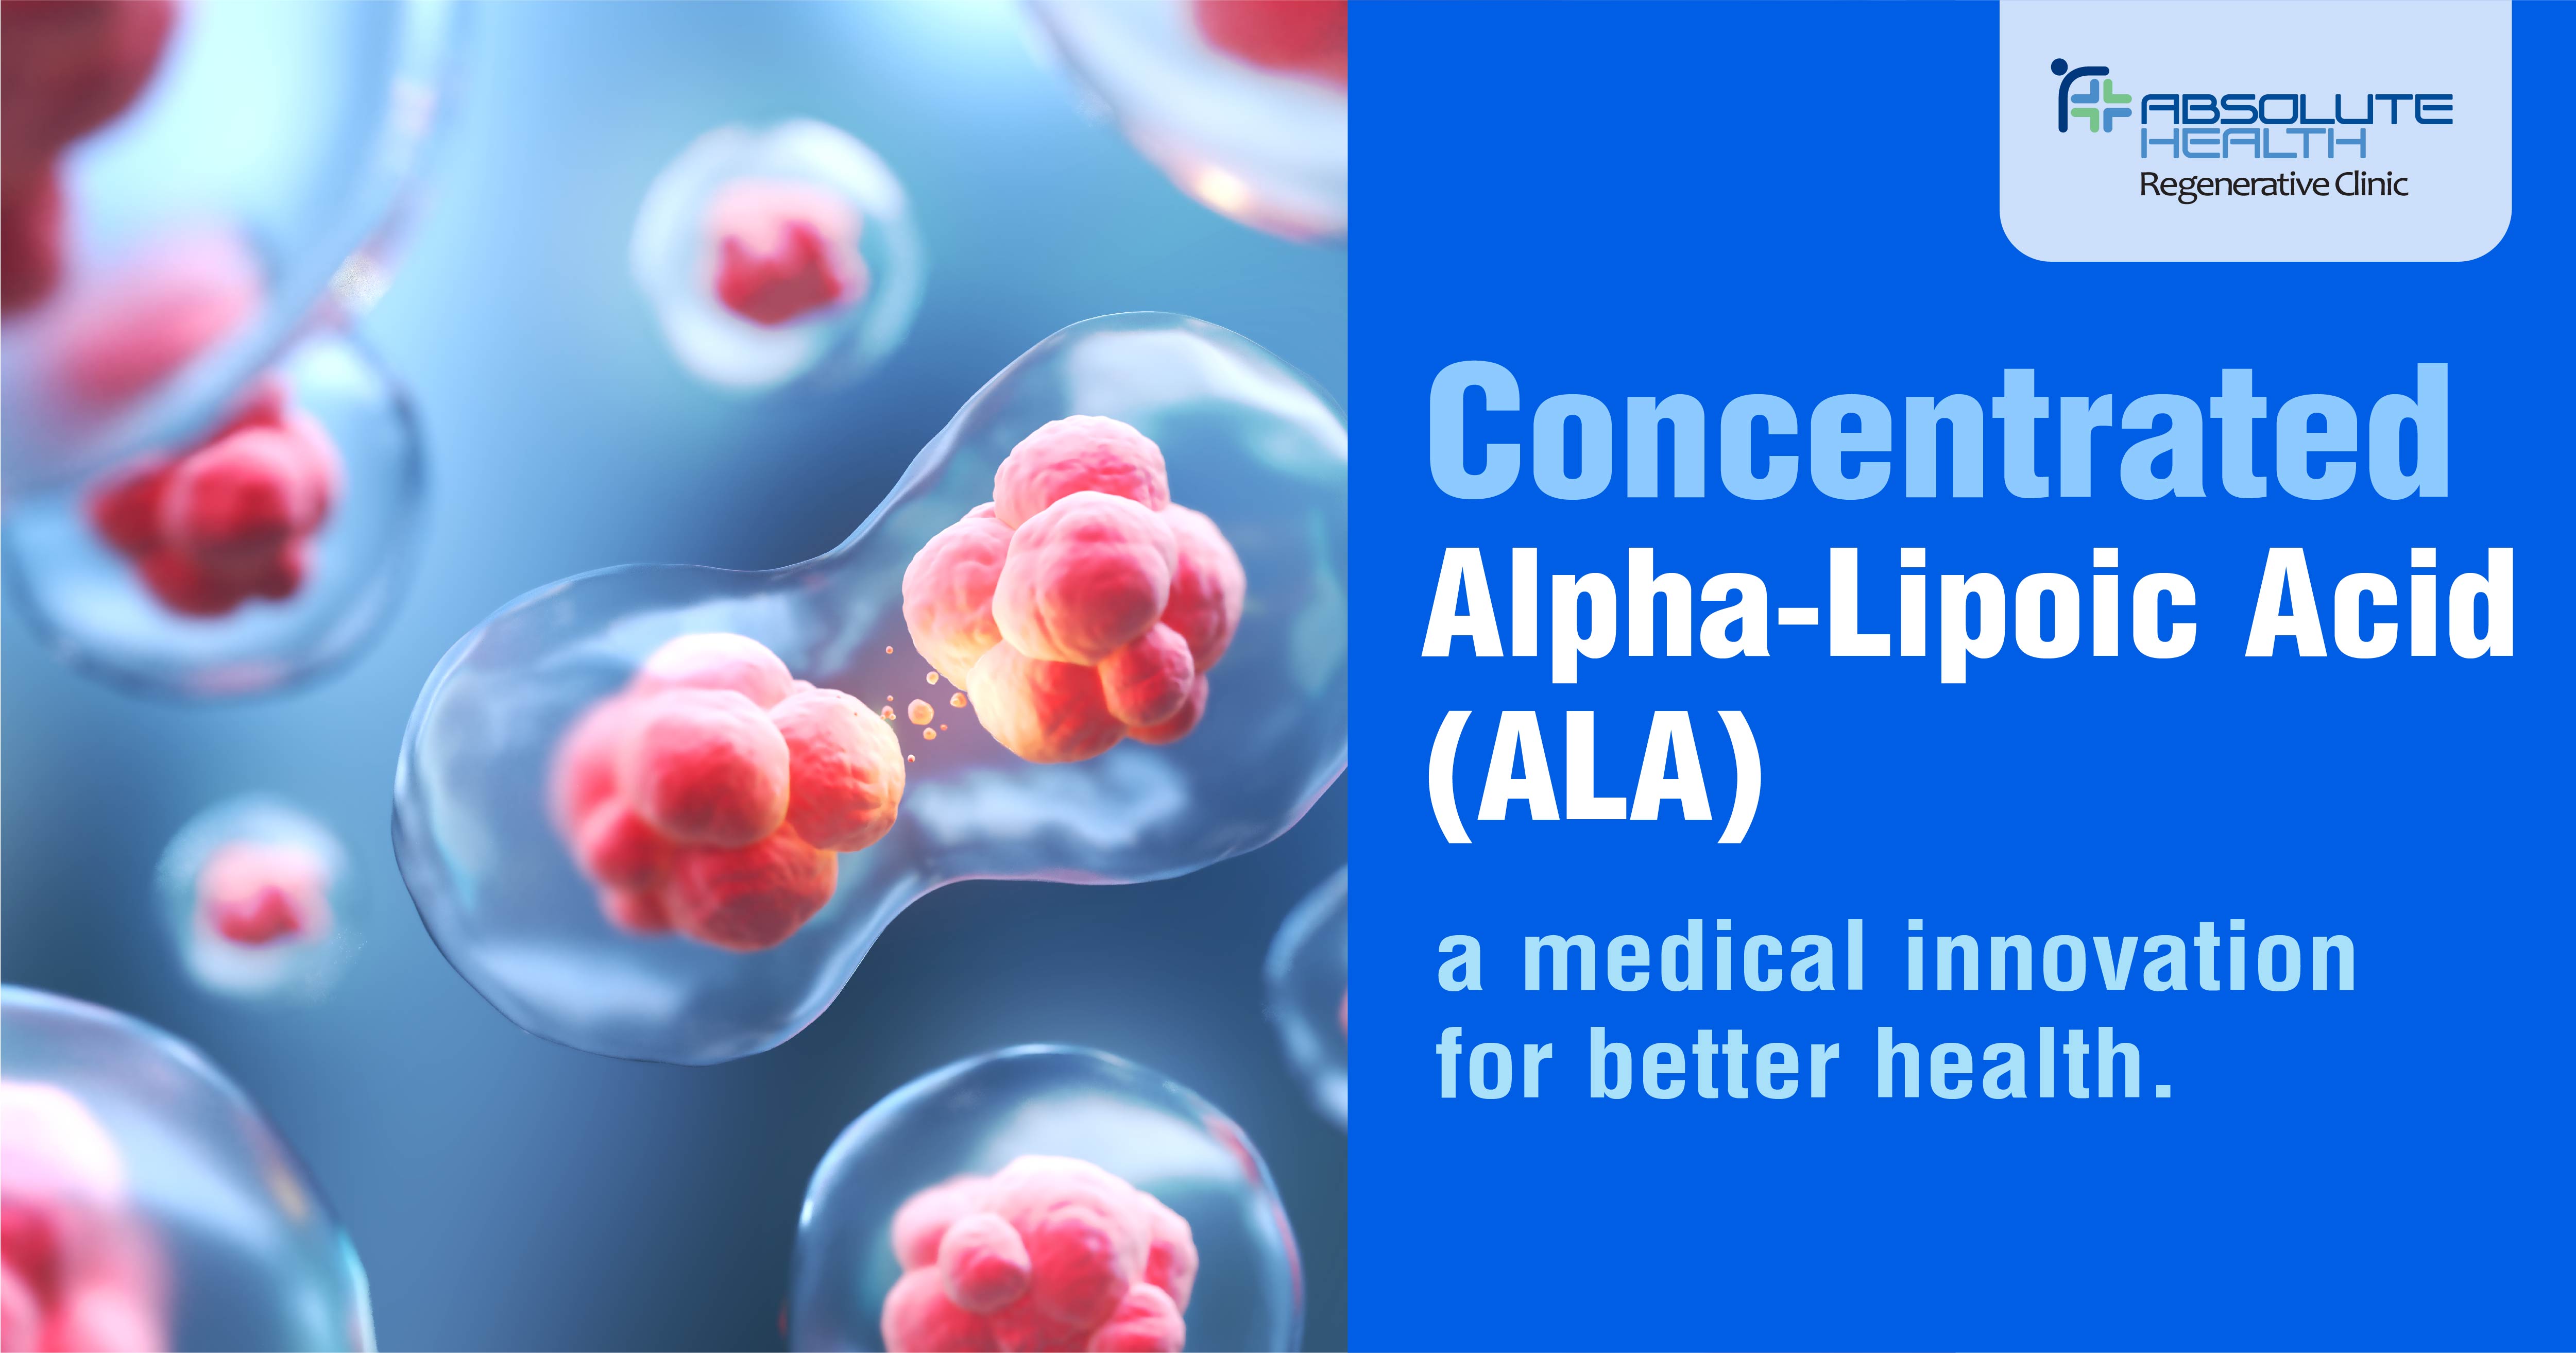 Alpha-Lipoic Acid (ALA), a medical innovation for better health.